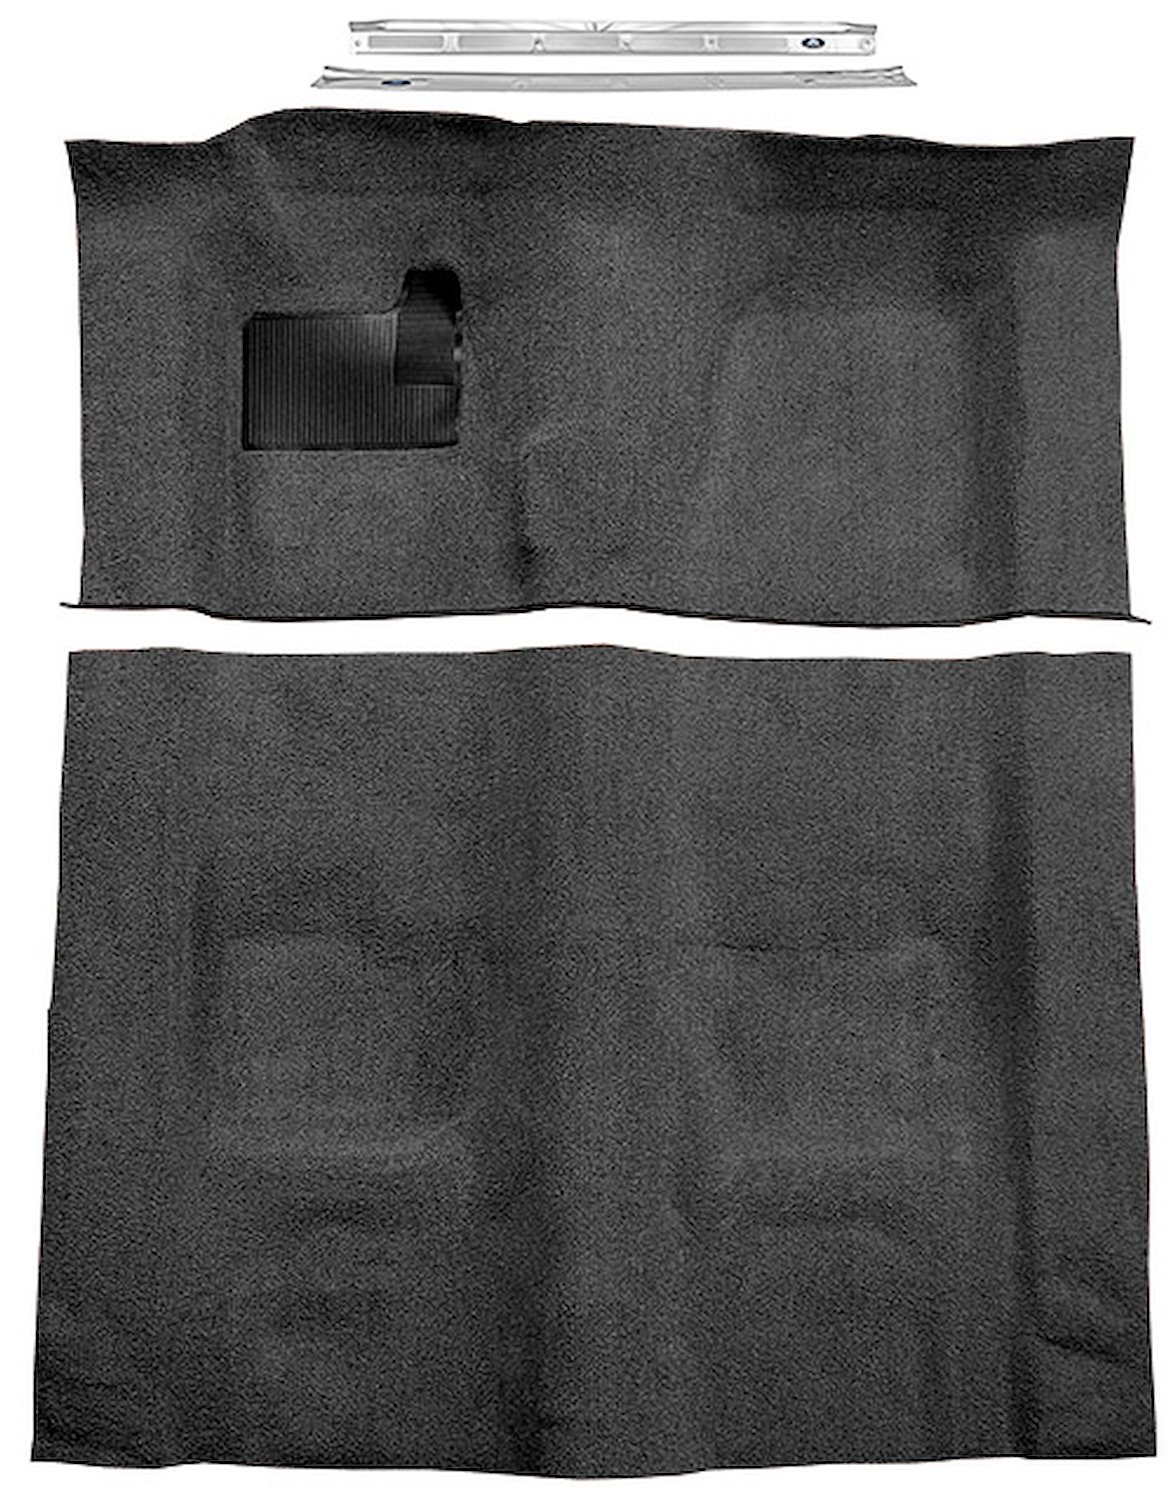 Black Molded Cut Pile Carpet Kit w/Door Sill Plates for 1970-1973 Chevy Camaro, Pontiac Firebird [4-Speed Transmission]